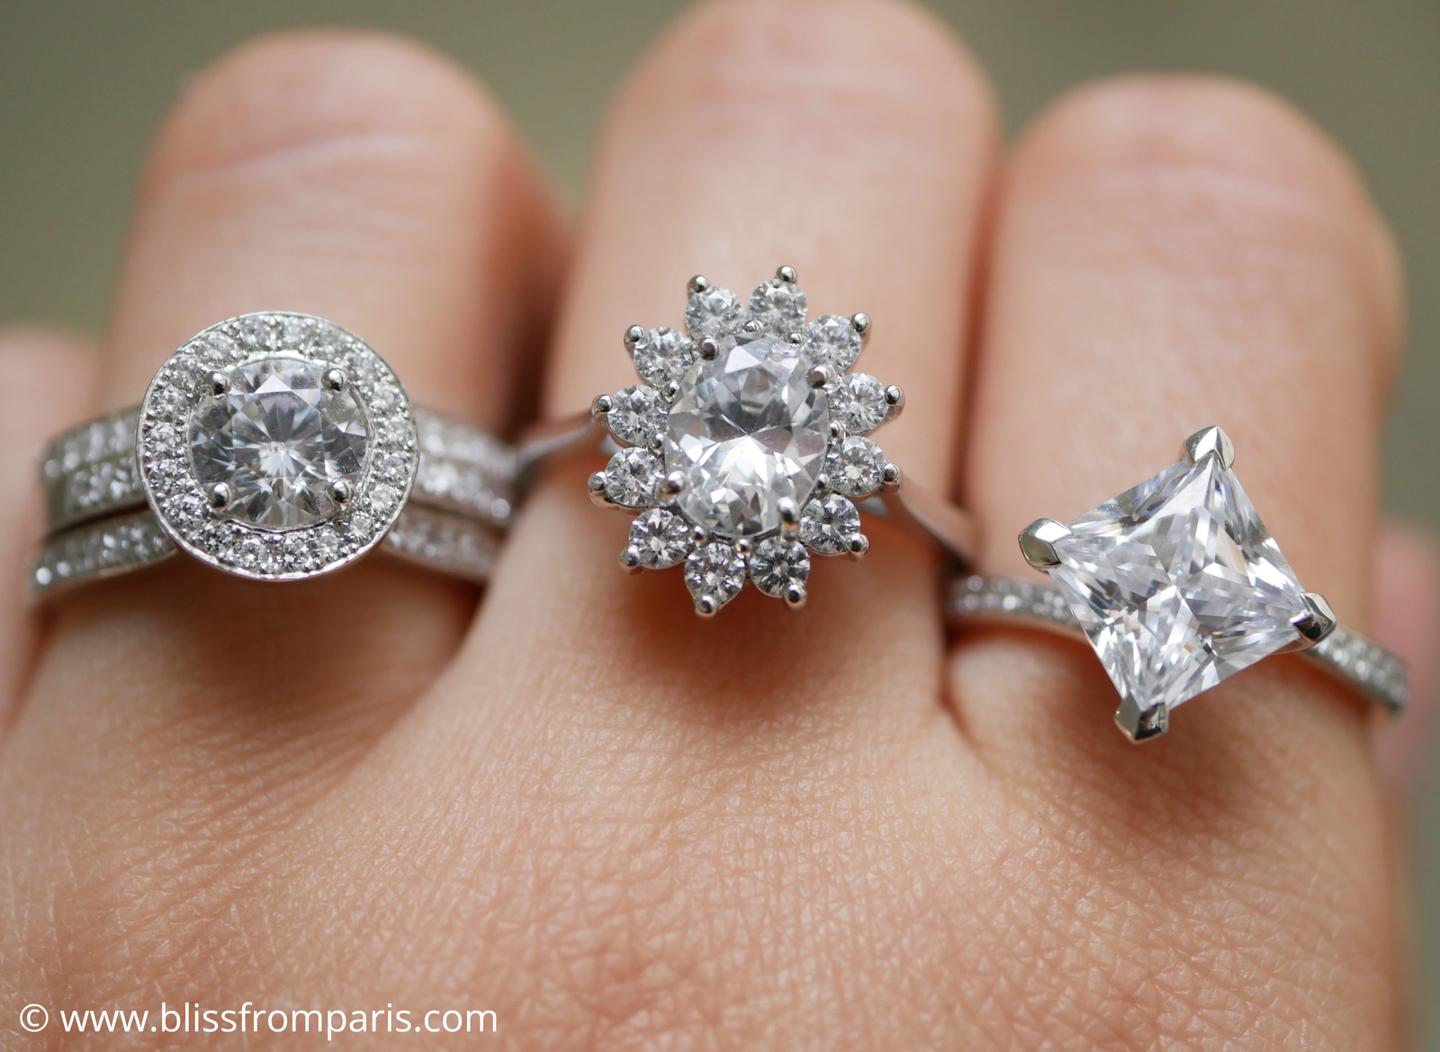 kwartaal Mantel Terzijde Wearing Engagement Ring On Middle Finger? The Meaning - BAUNAT